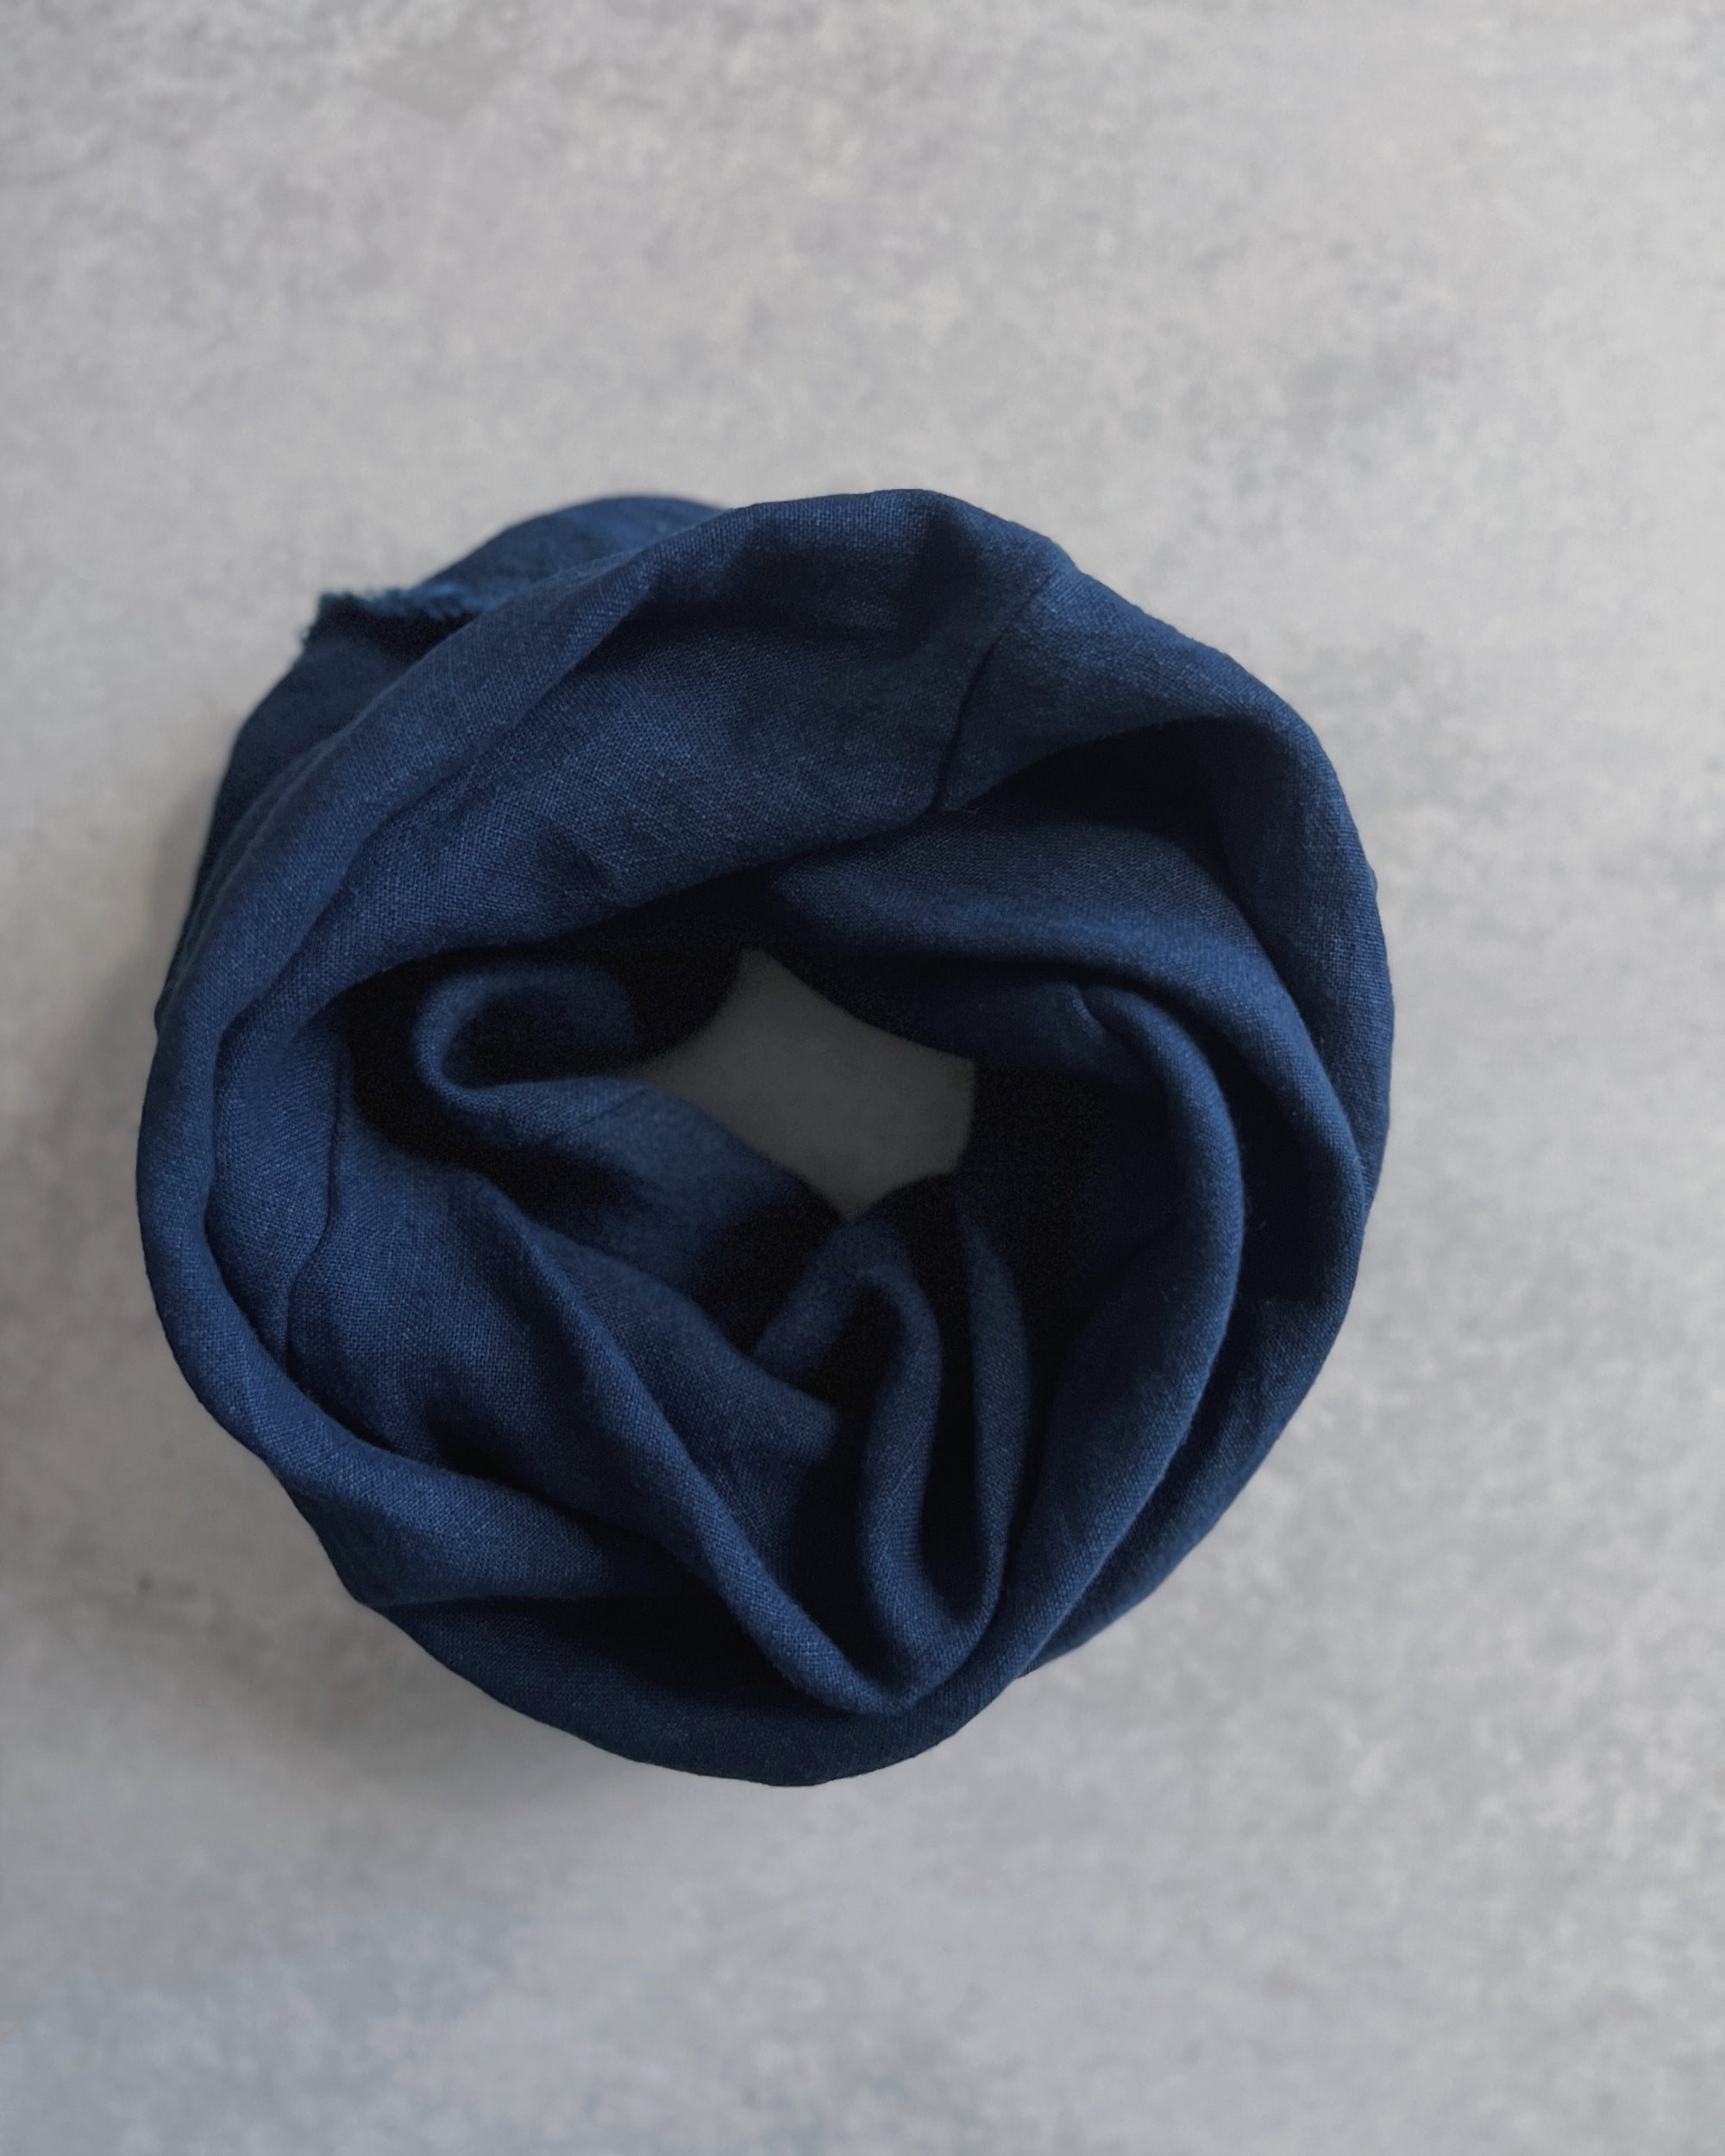 'm' for the maker : indigo cotton origin loop scarf